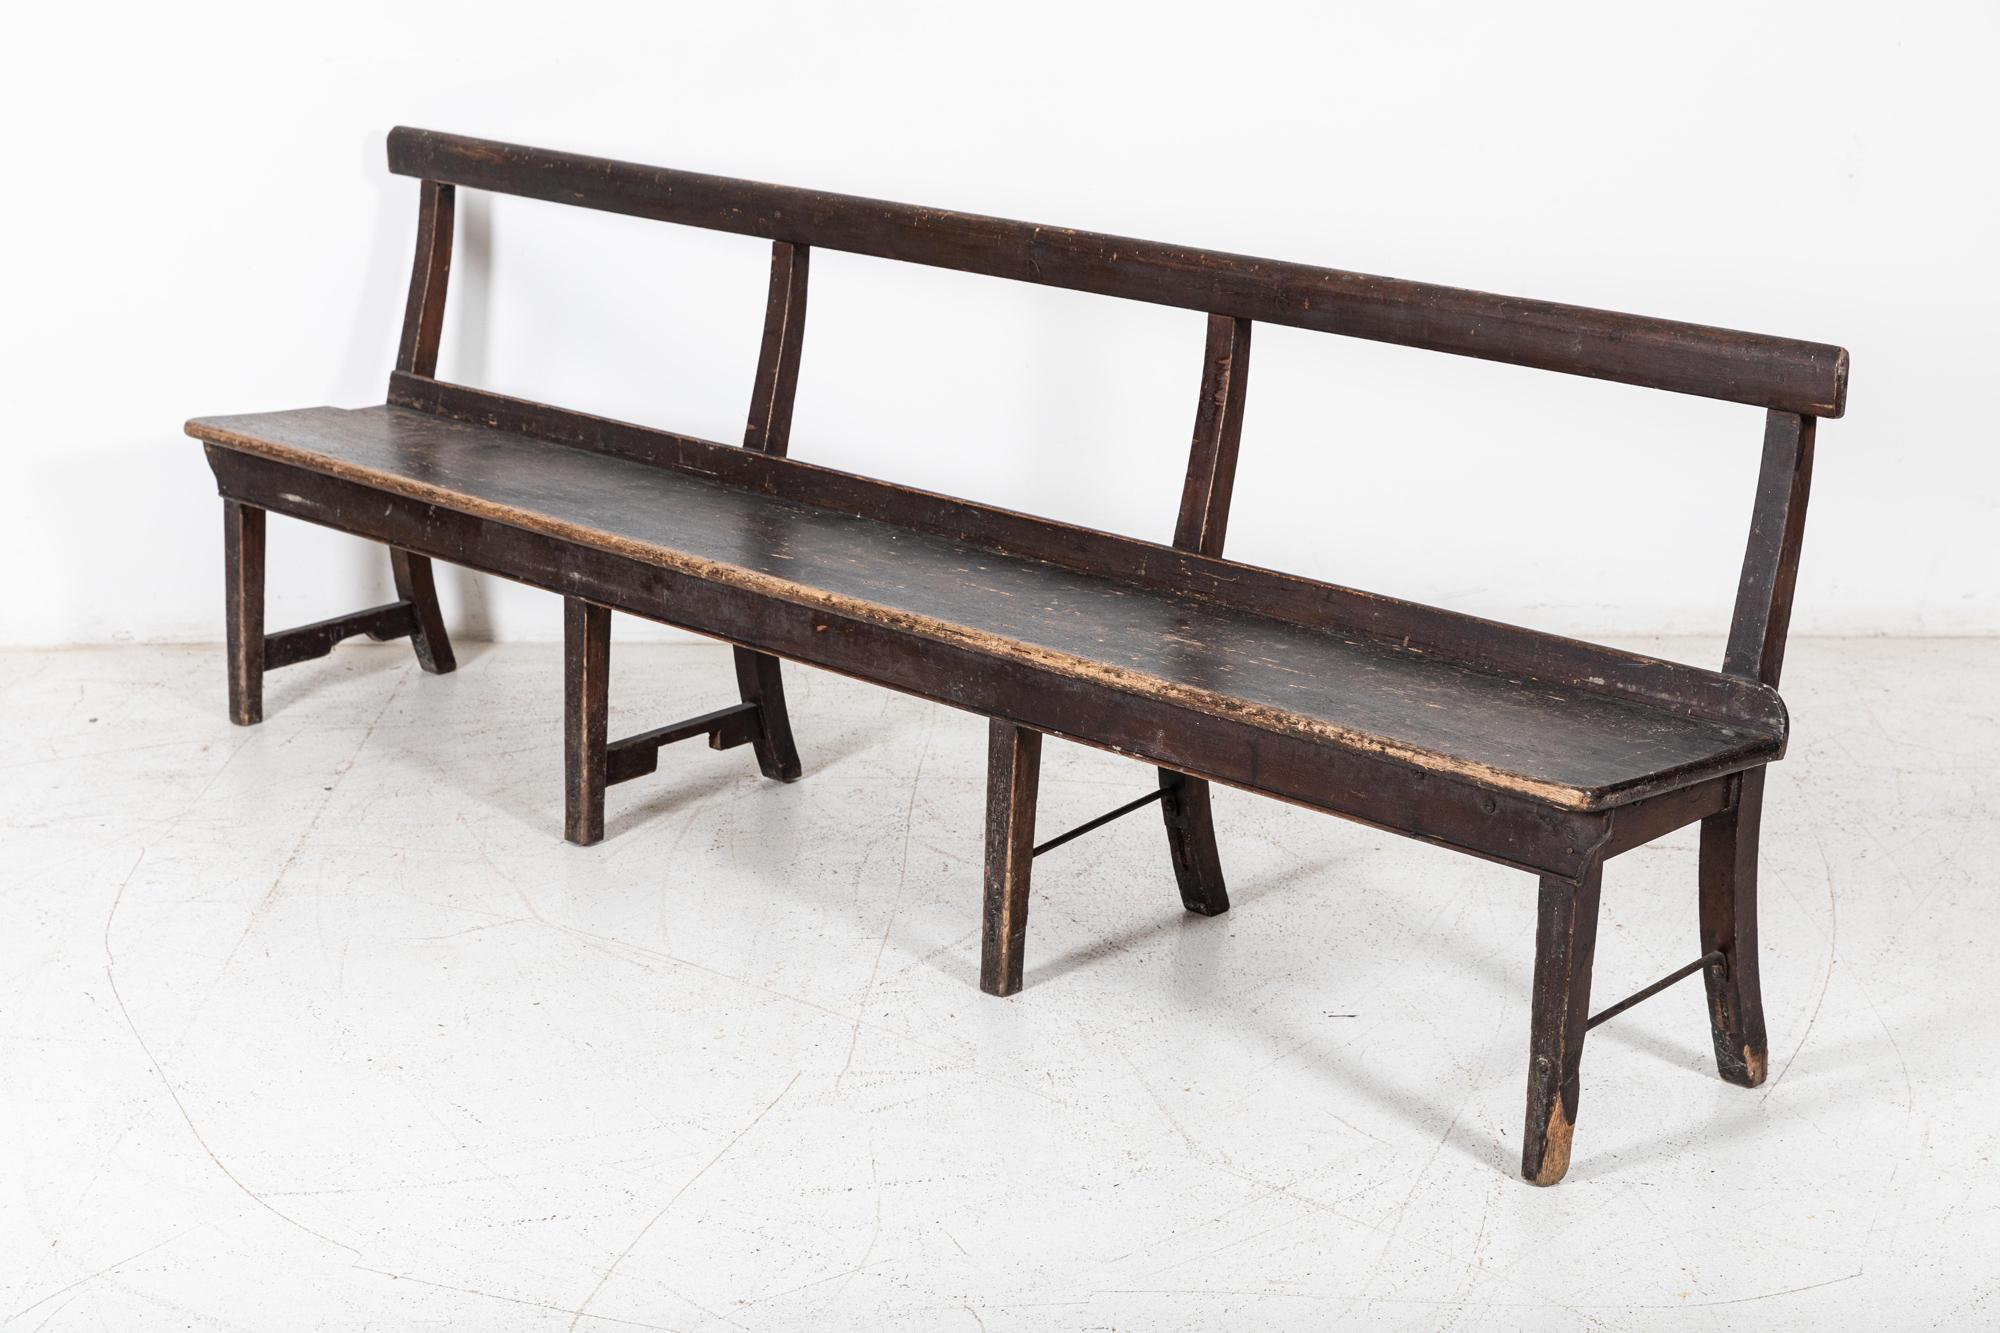 Circa 1880
19thC English Pine Chapel bench in original finish
(vat qualifying )
W240 x D37 x H80 cm
Seat height 43 cm.
 